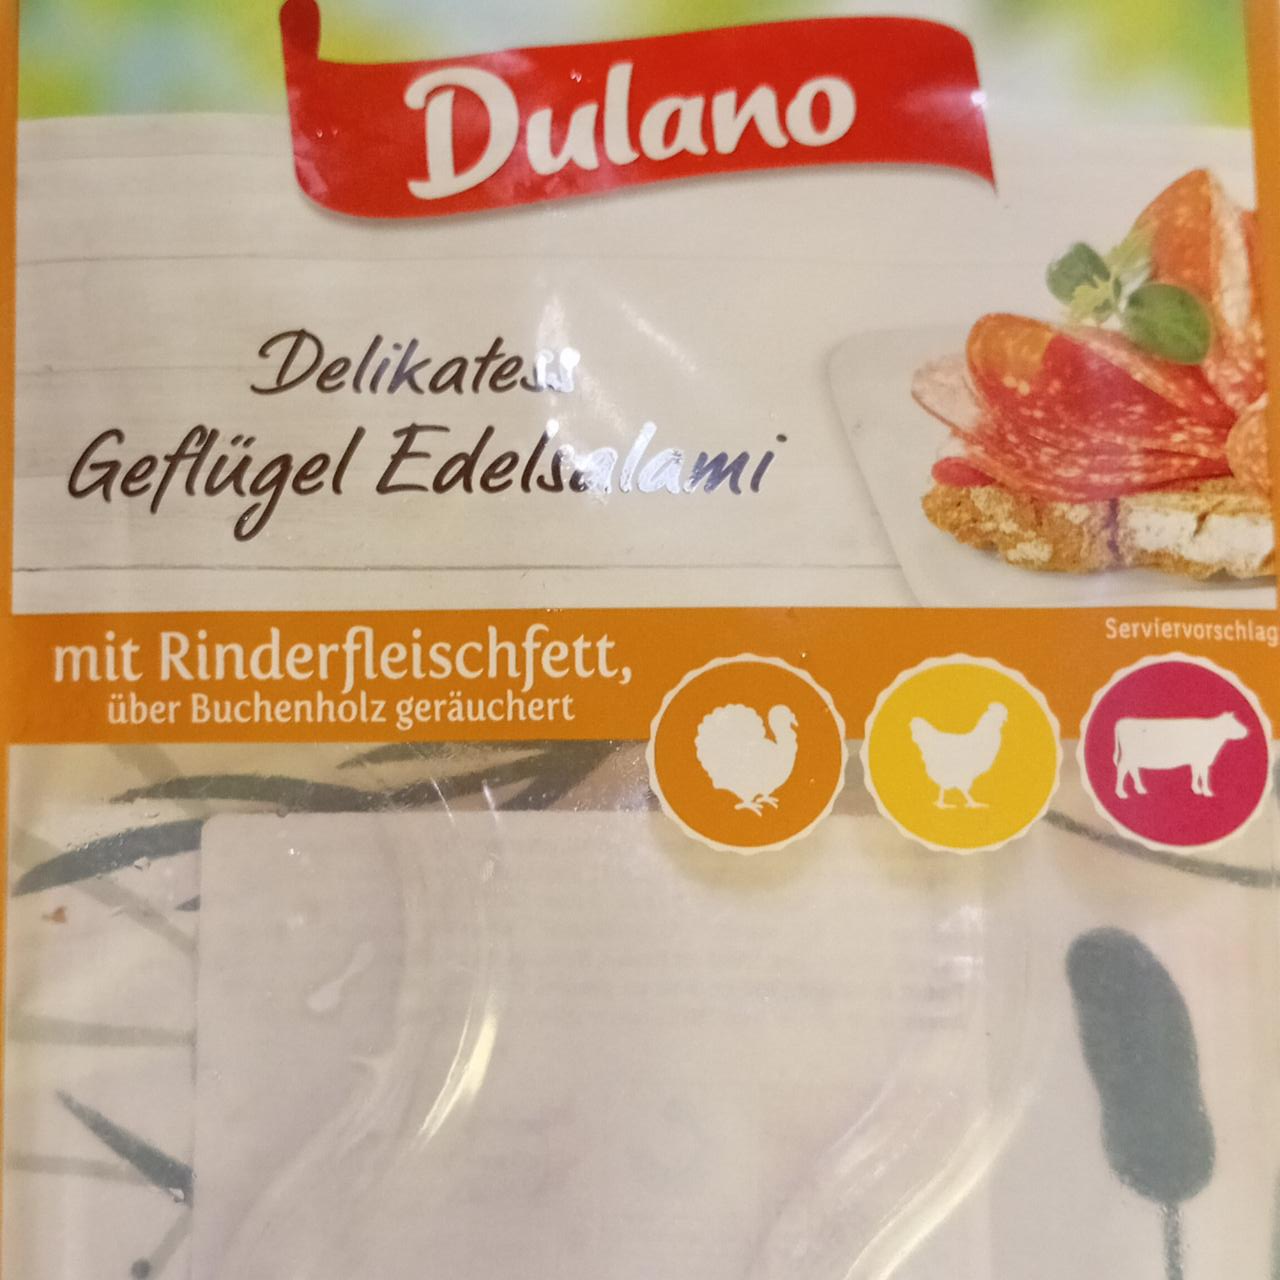 Delikatess Geflügel Edelsalami mit Rinderfleischfett geräuchert Dulano -  kalorie, kJ a nutriční hodnoty